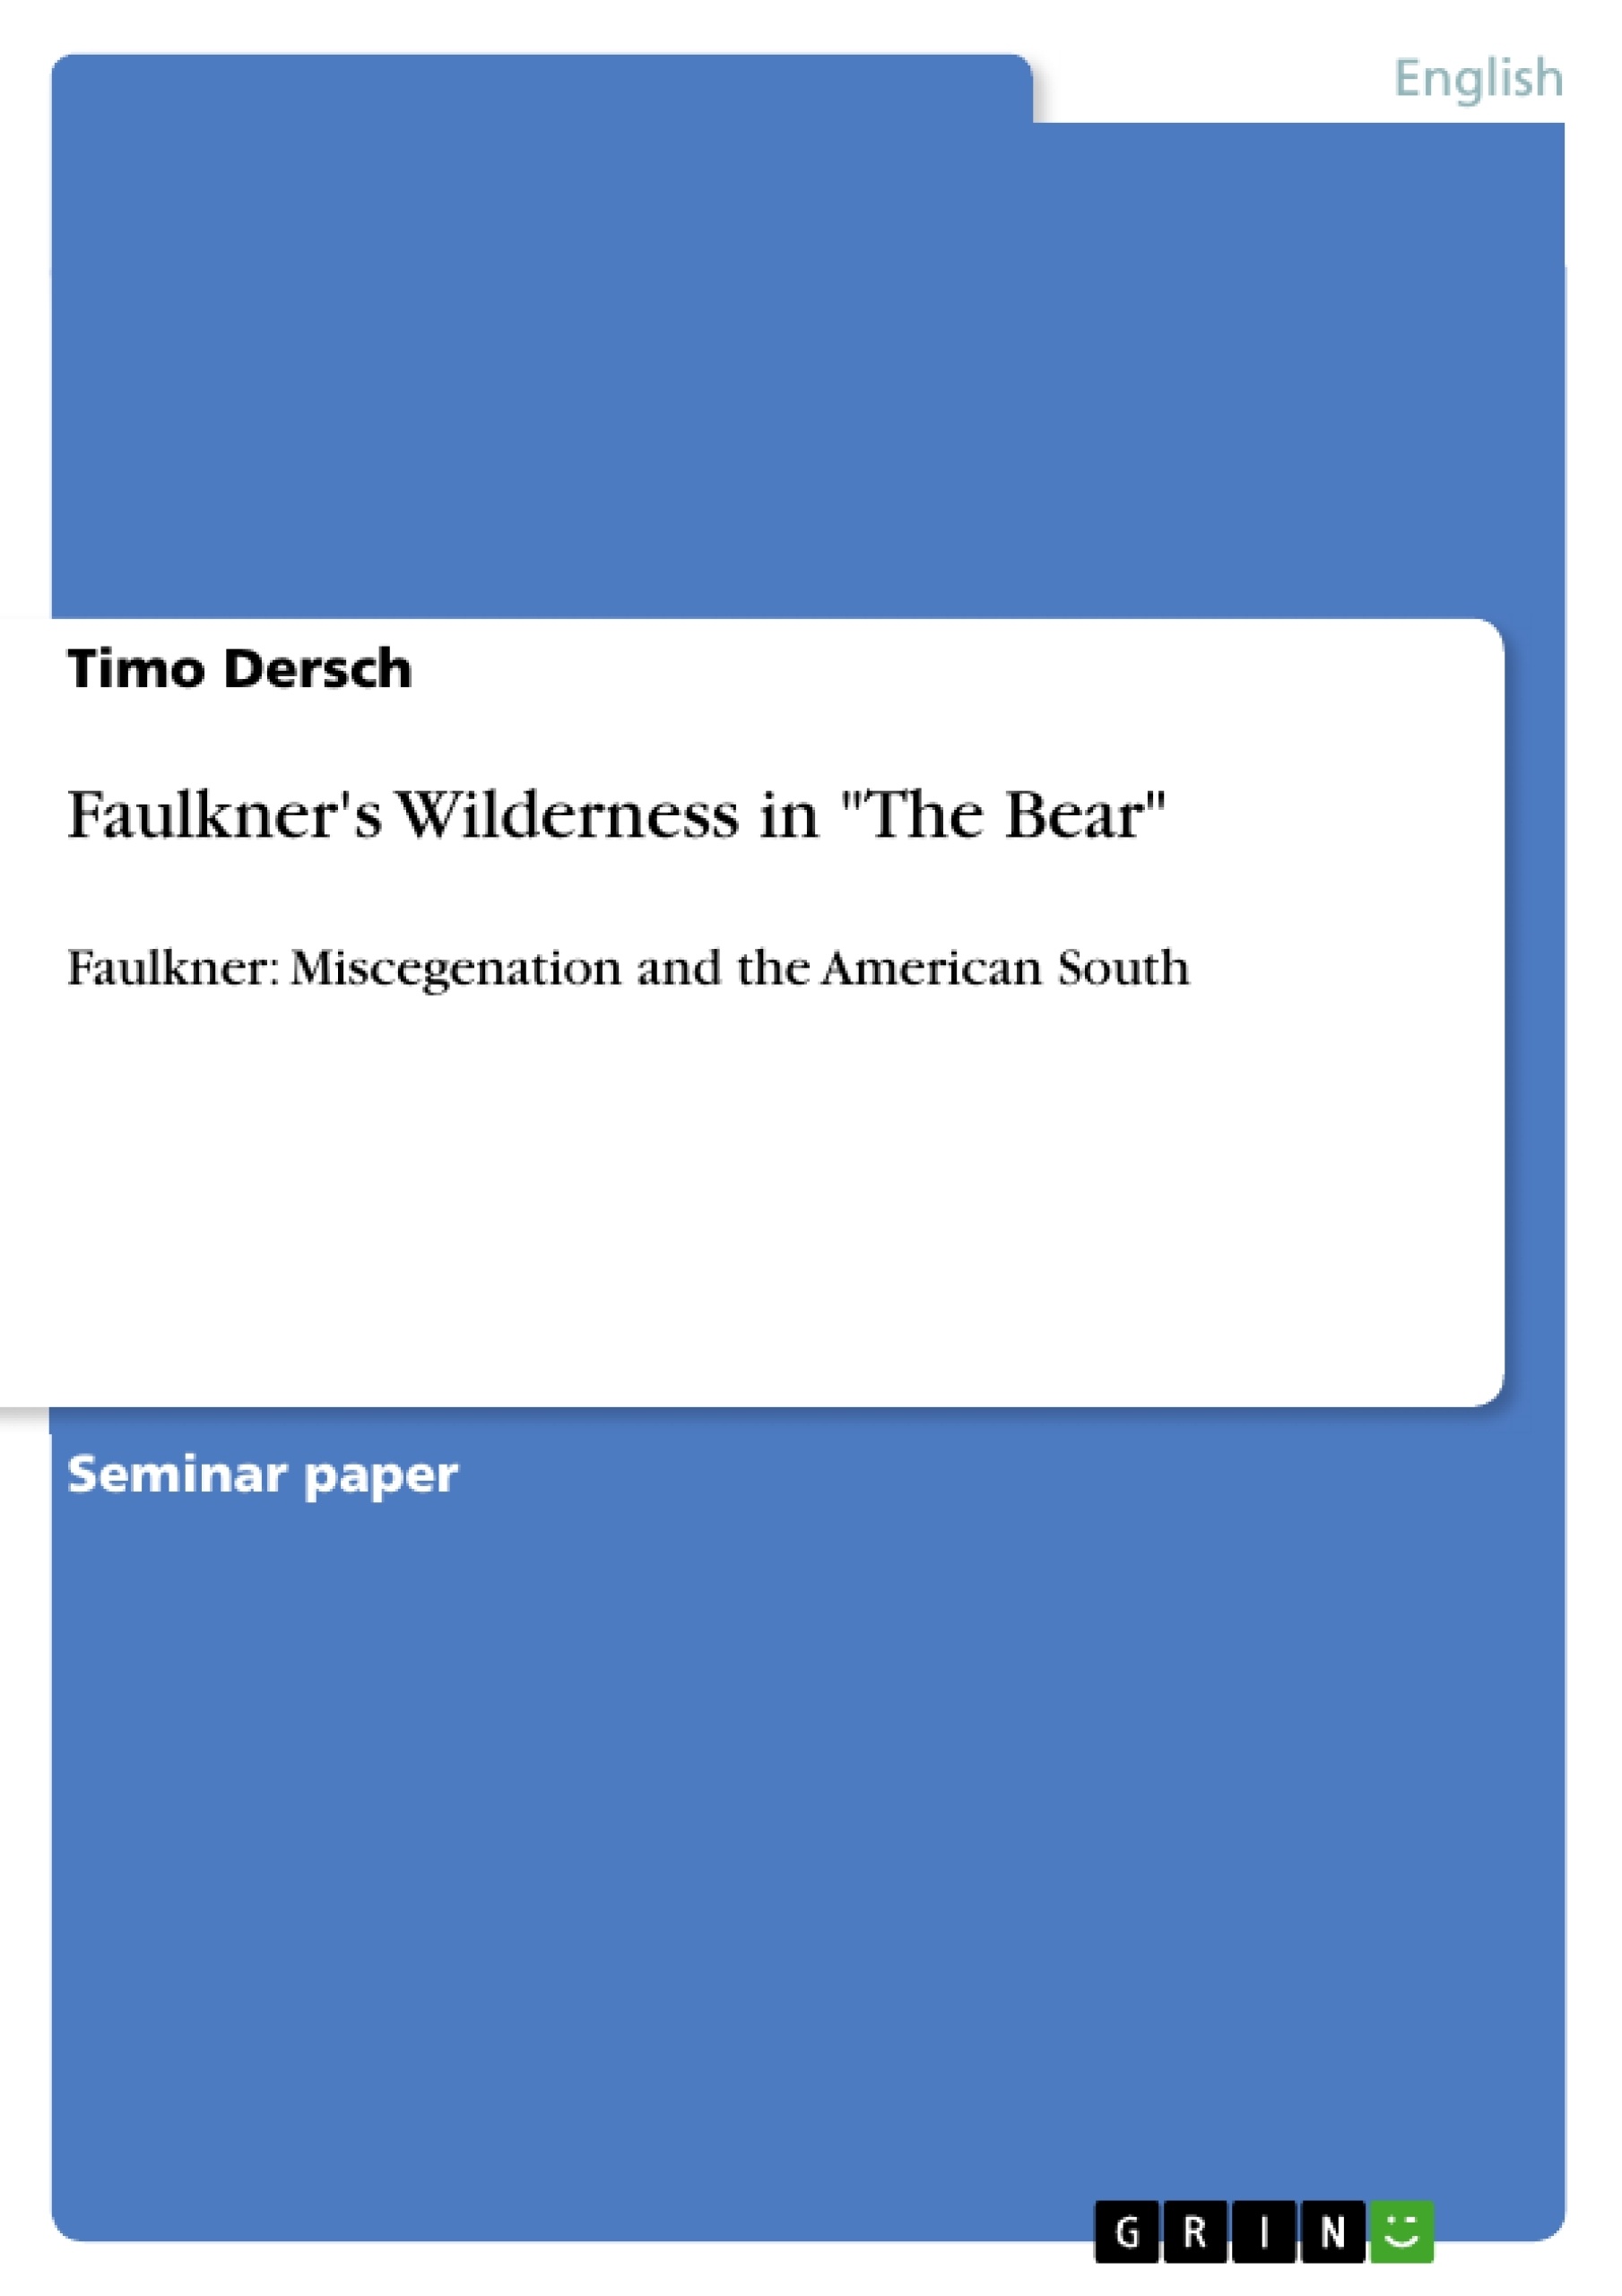 Title: Faulkner's Wilderness in "The Bear"